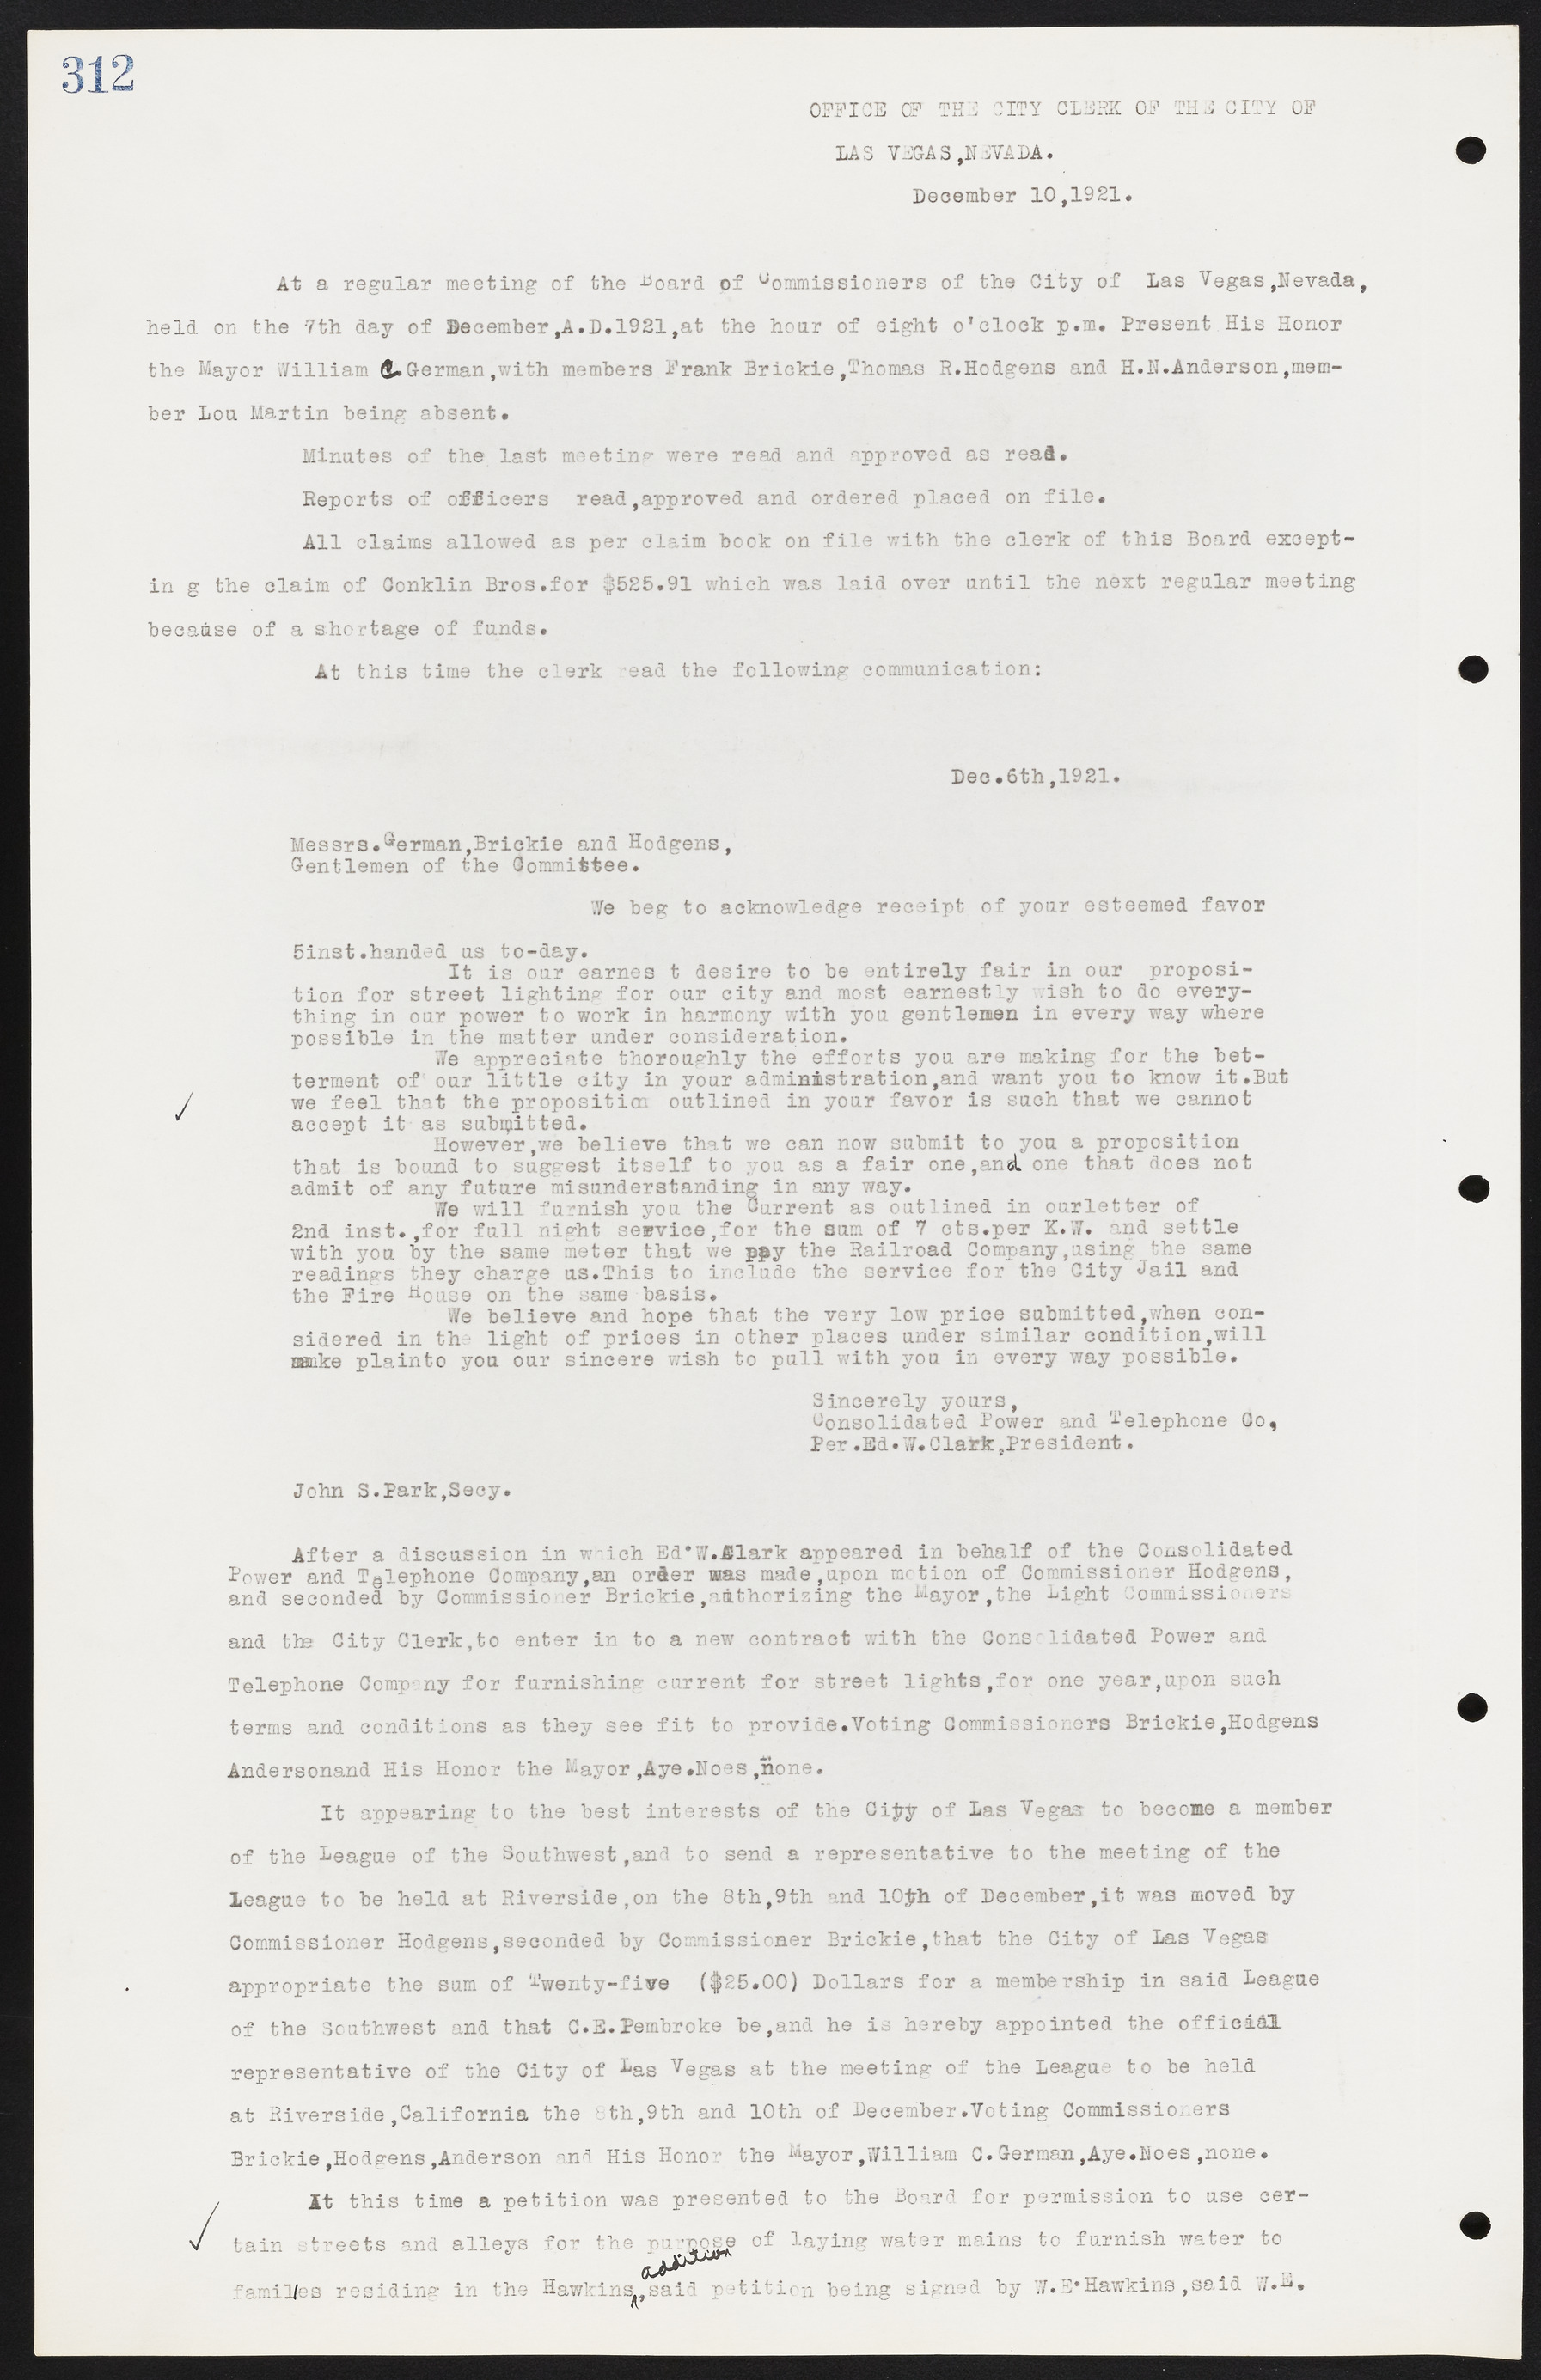 Las Vegas City Commission Minutes, June 22, 1911 to February 7, 1922, lvc000001-328